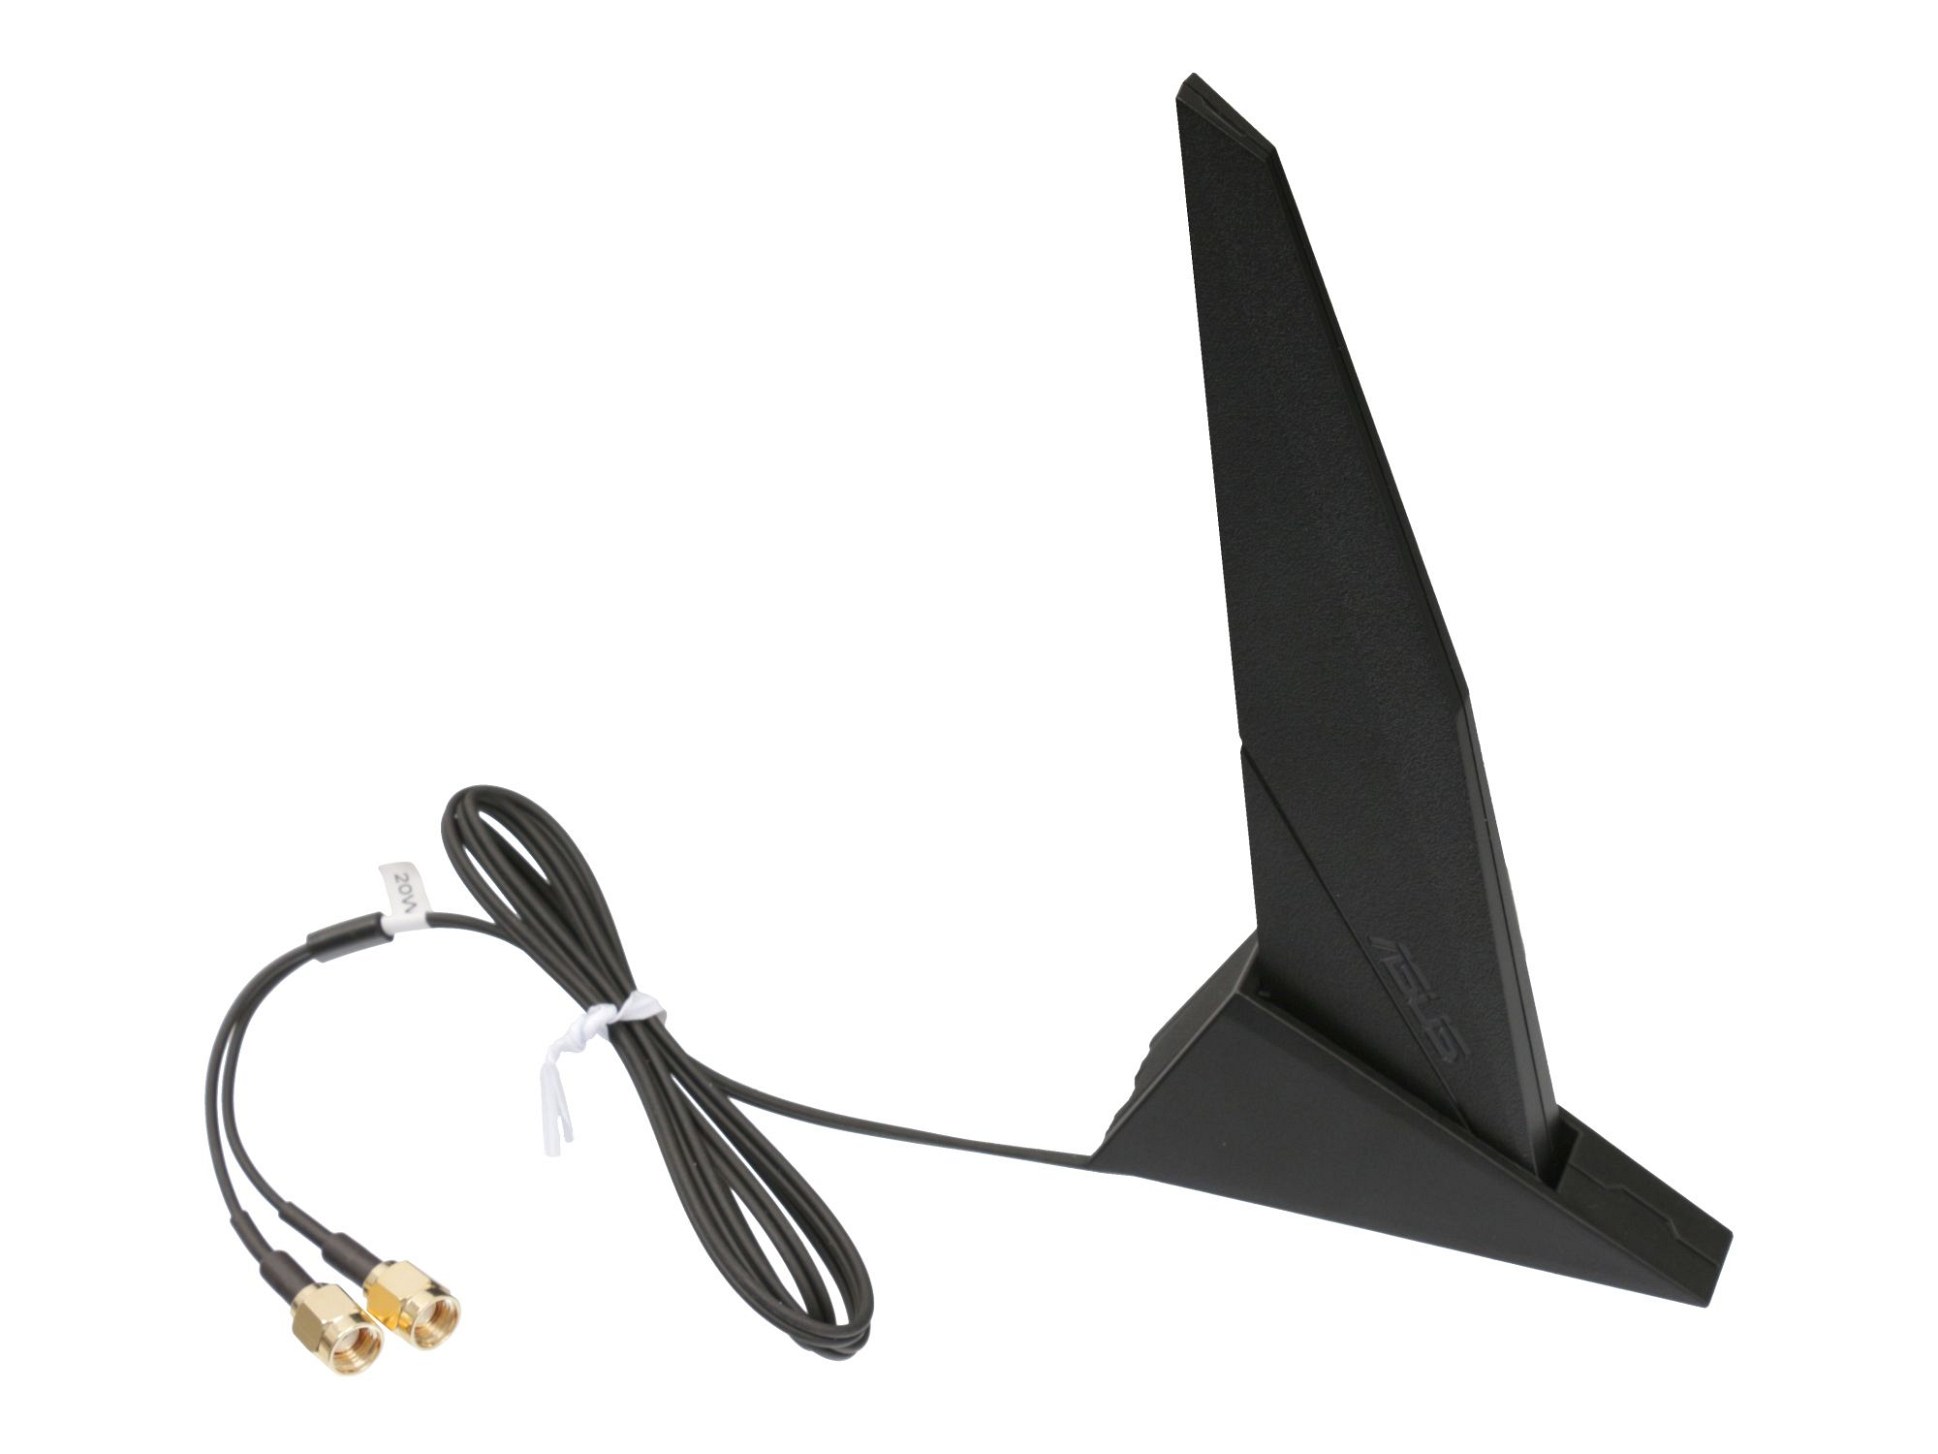 Externe Asus RP-SMA DIPOLE Antenne für Asus ROG MAXIMUSXII APEX